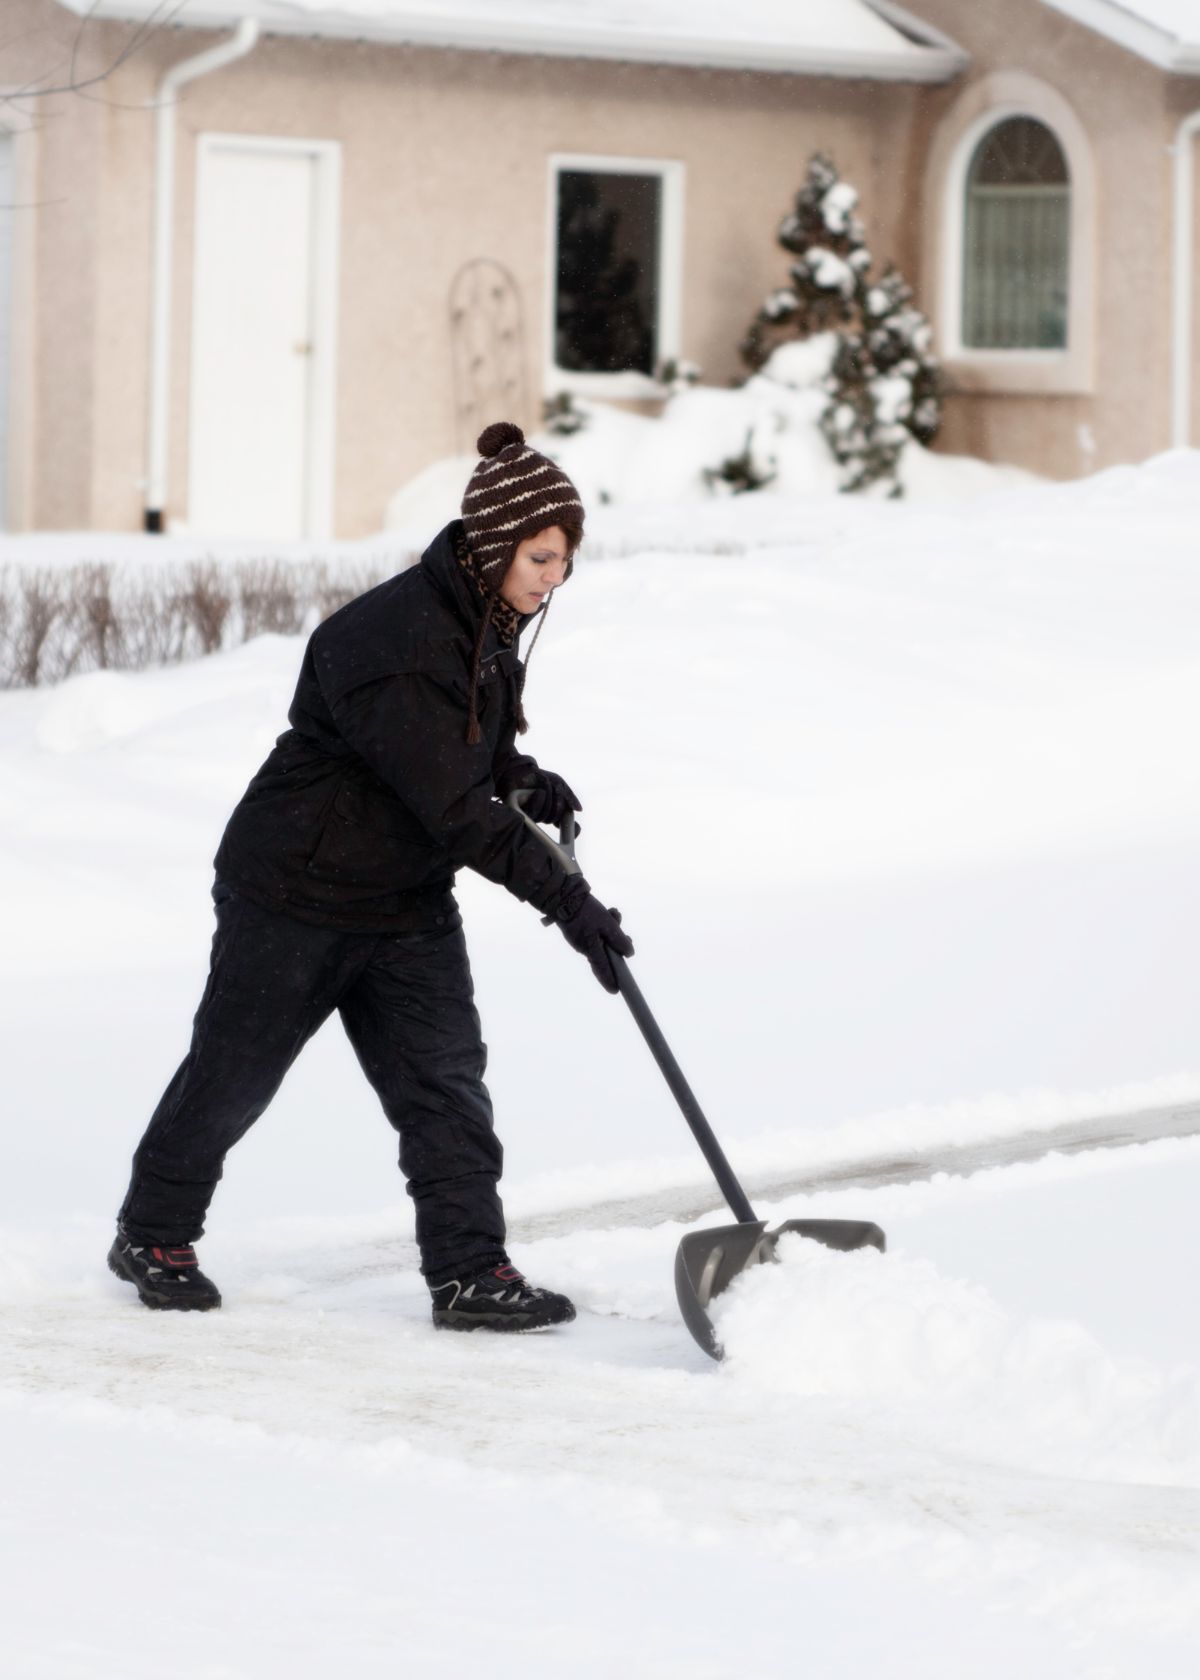 How to Assemble Cordless Snow Shovel